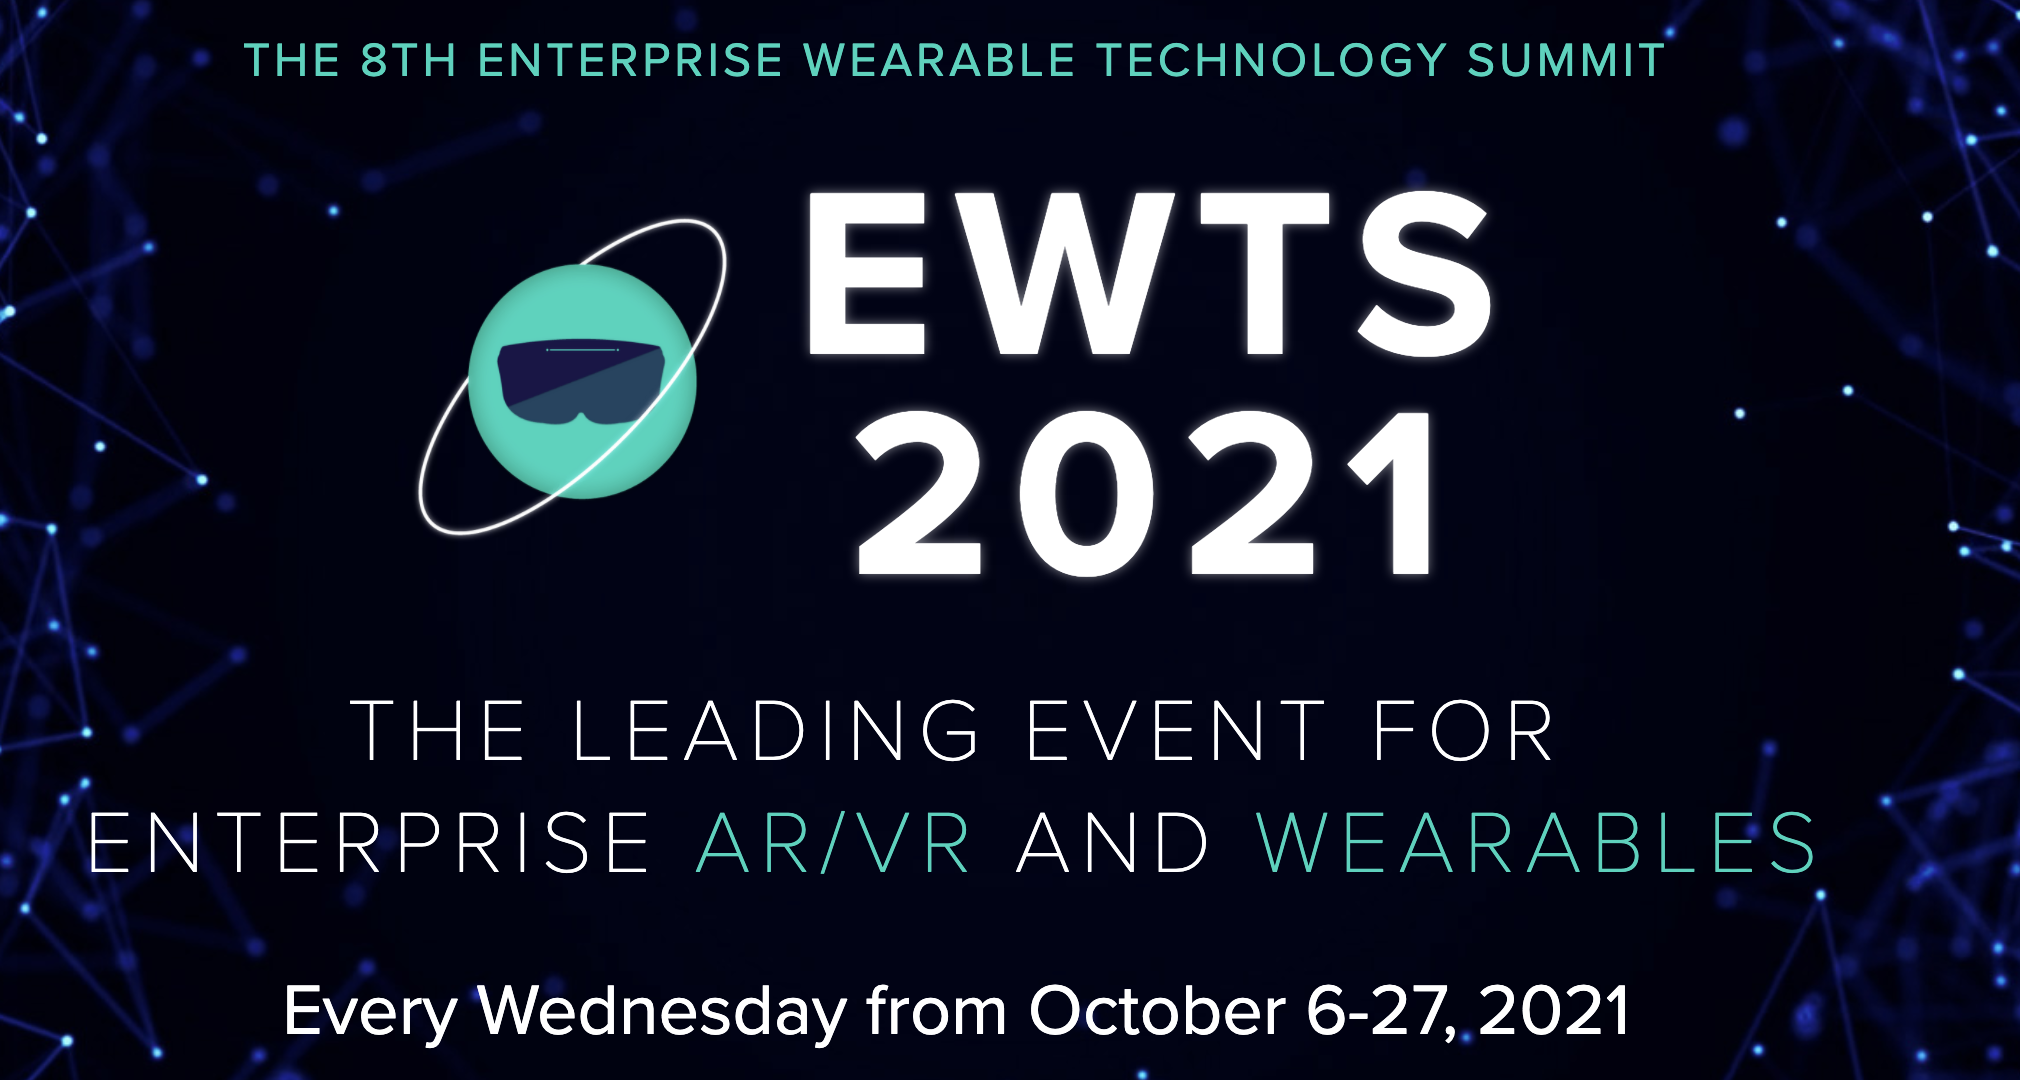 EWTS 2021: Oct 6-27 Virtual